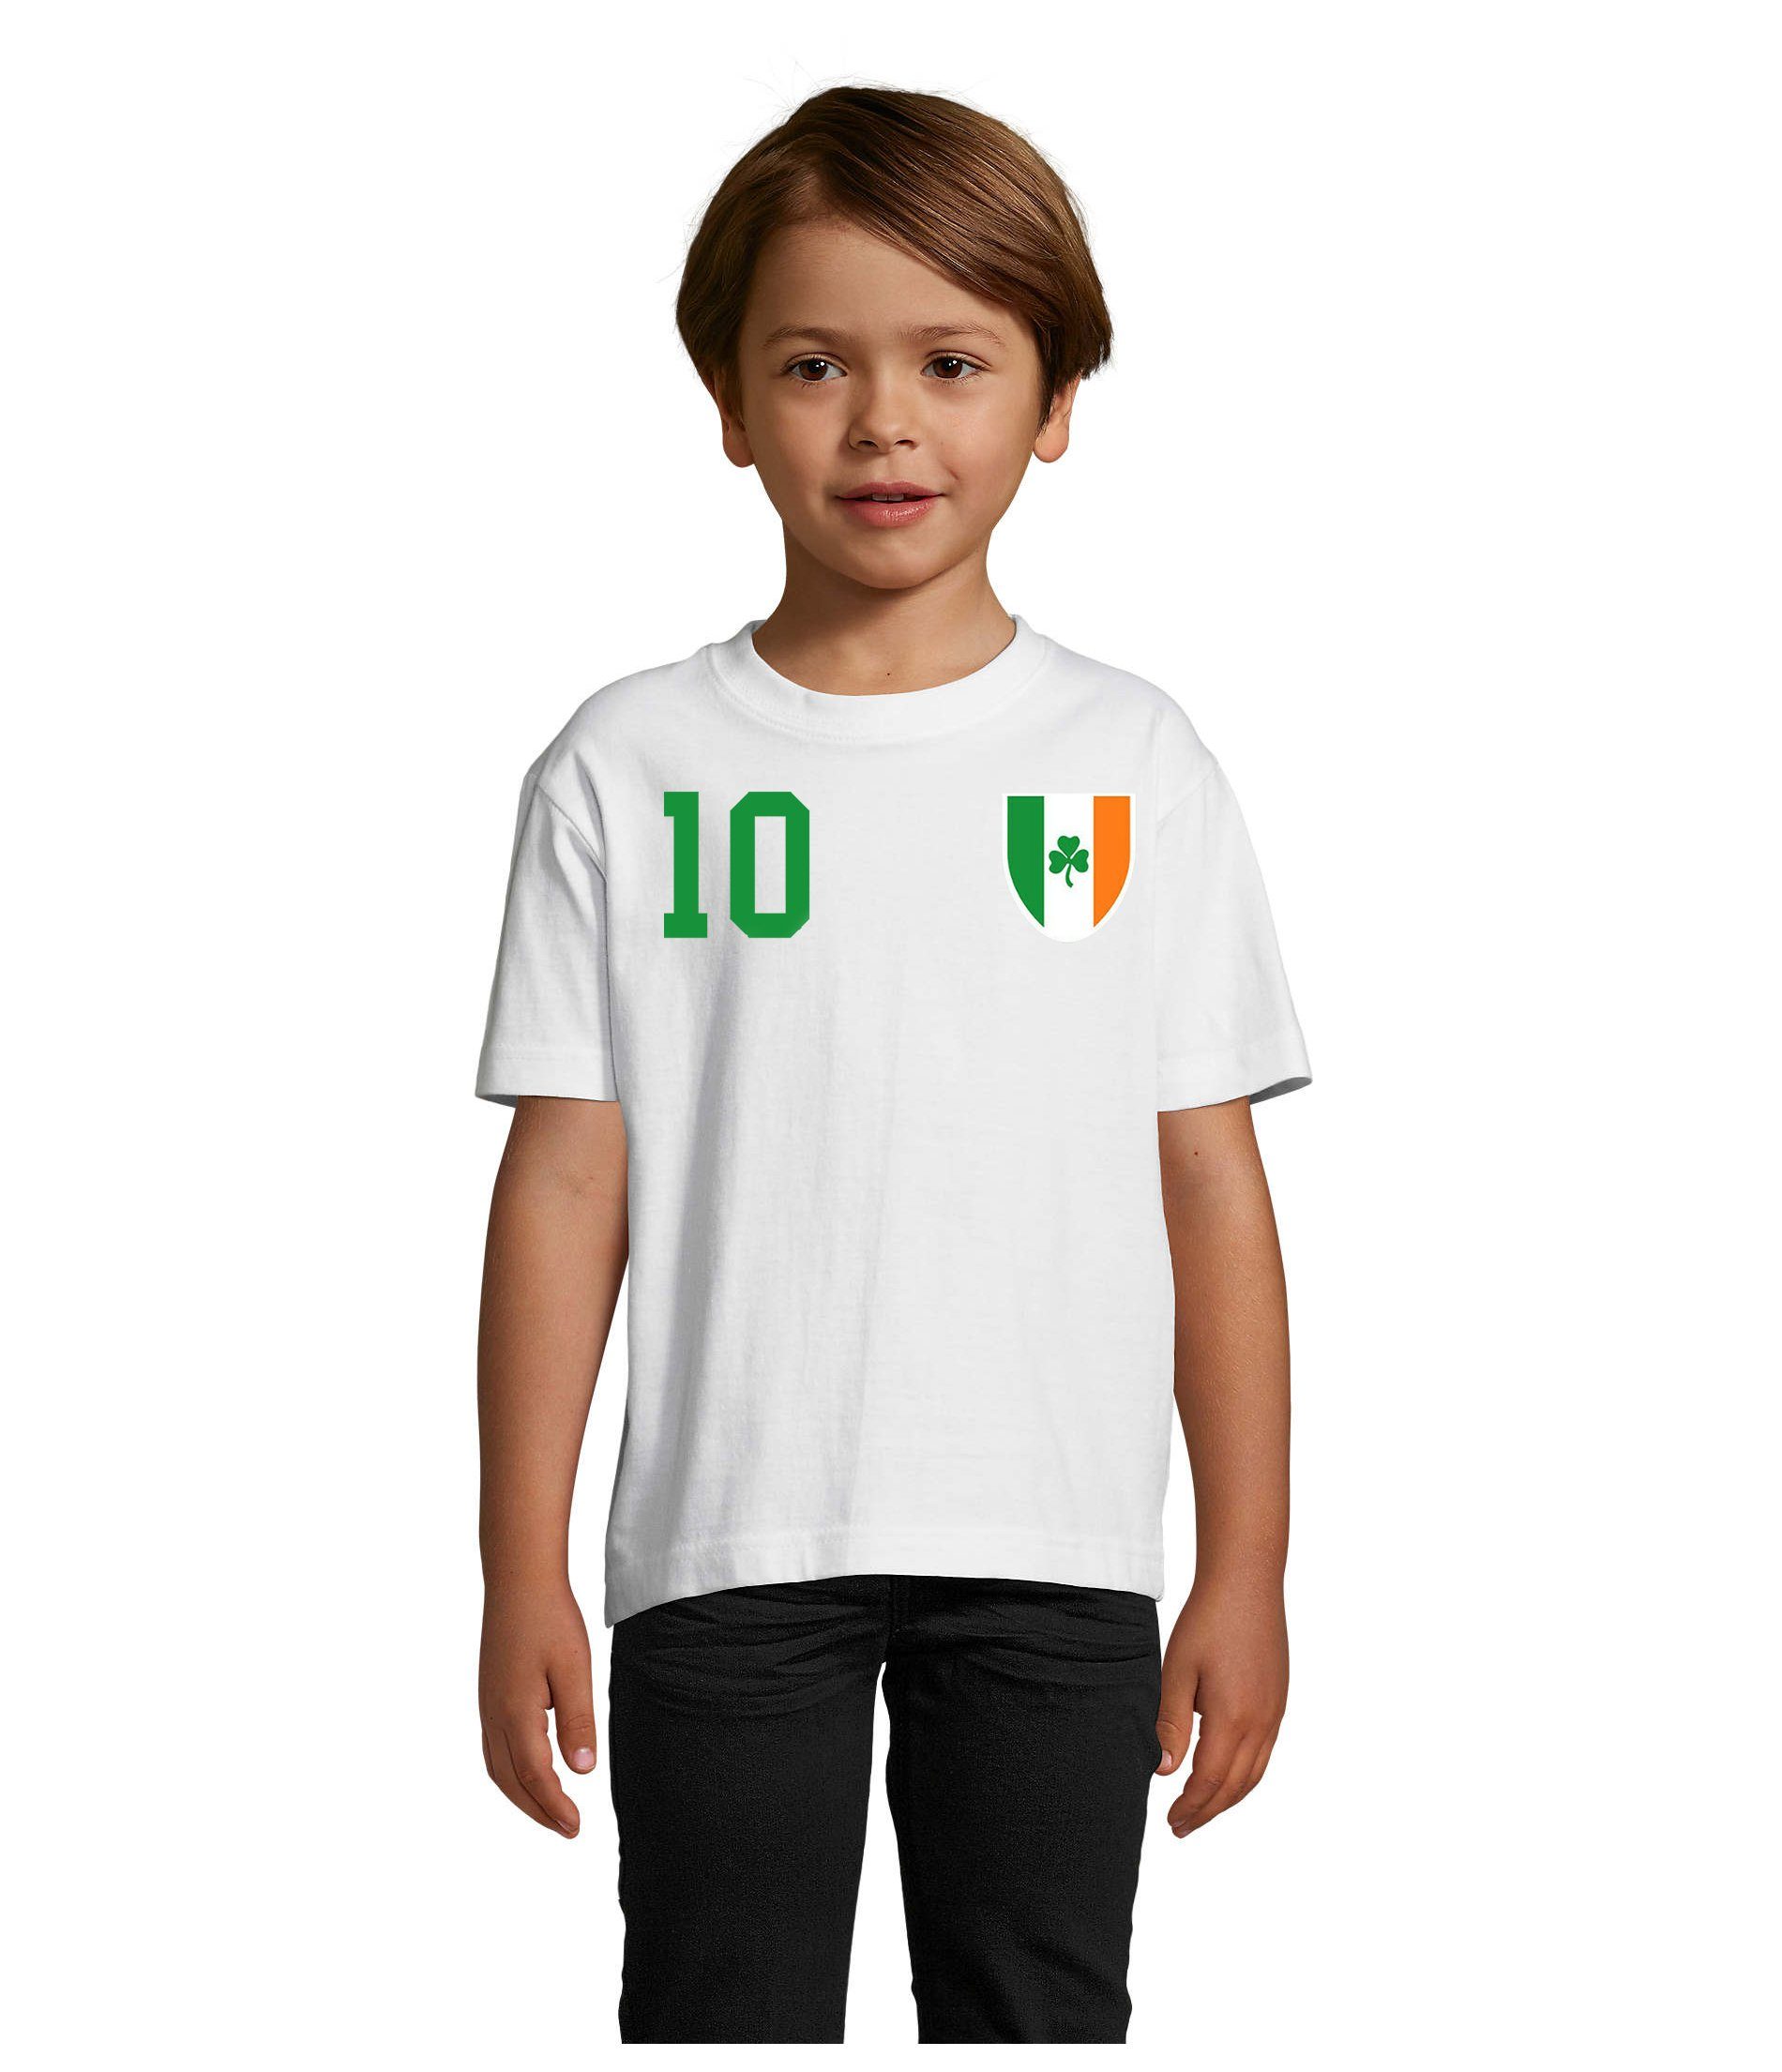 Blondie & Brownie T-Shirt WM Grün/Weiss EM Kinder Handball Weltmeister Sport Fußball Trikot Irland